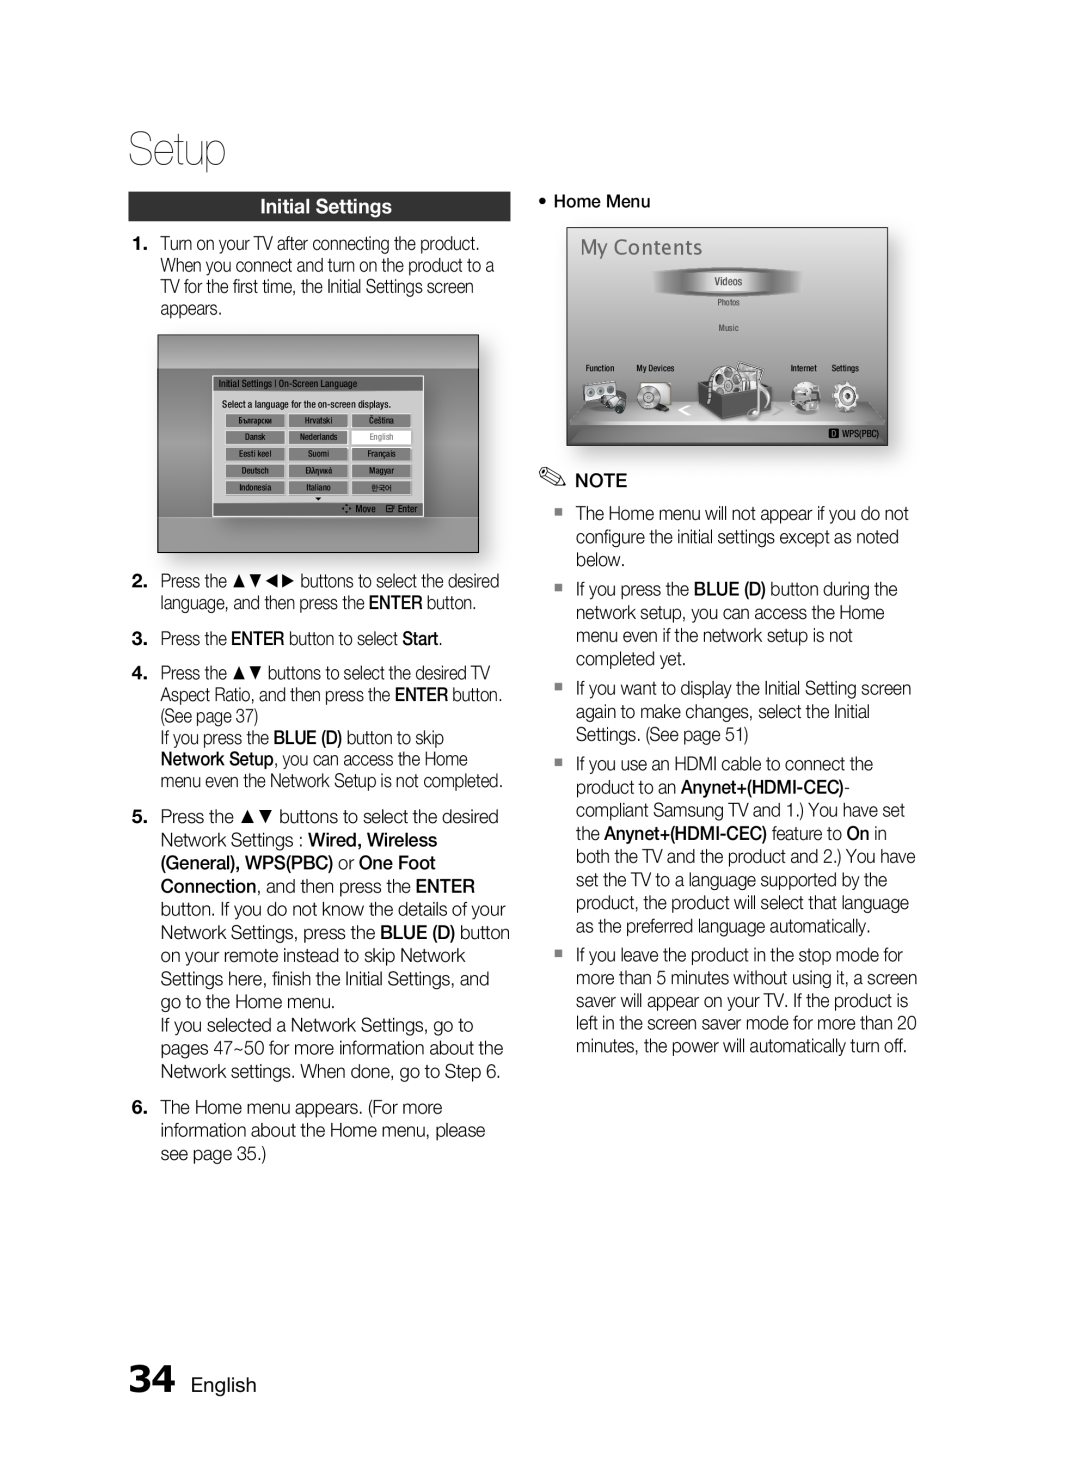 Samsung HW-D7000 user manual Setup, My Contents, Initial Settings 